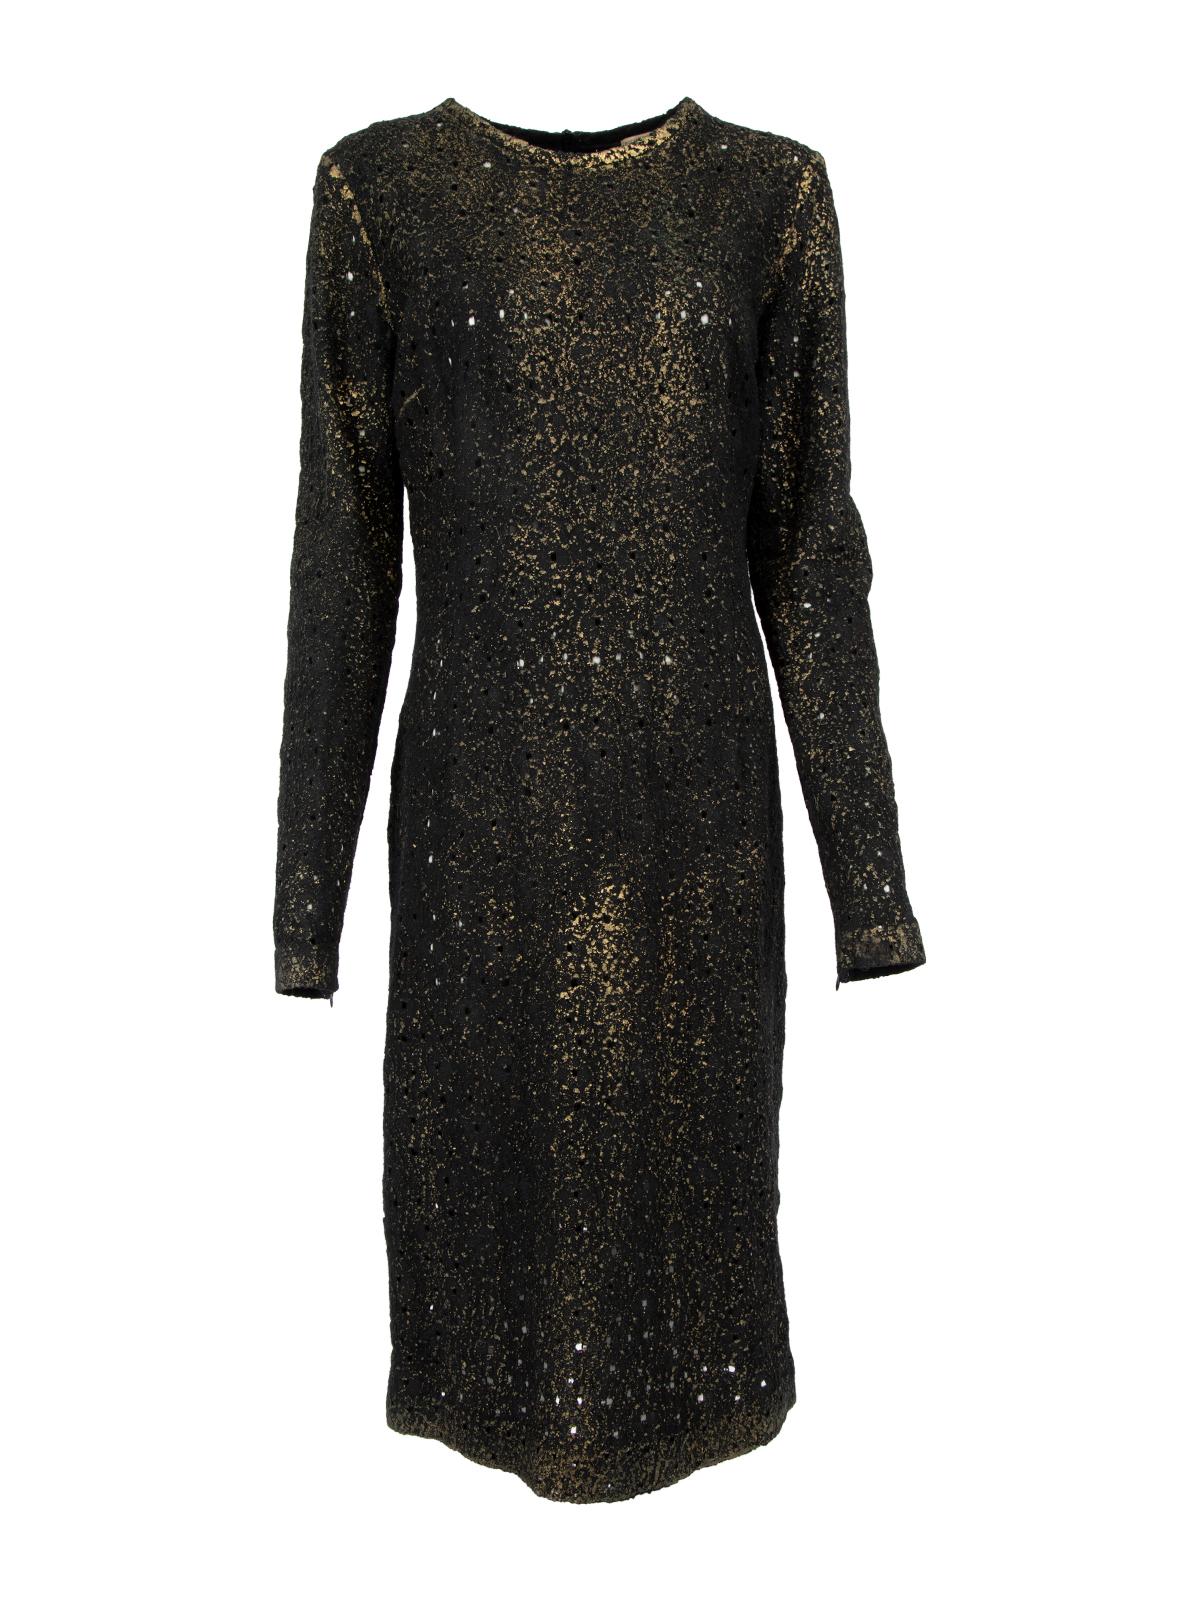 Pre-Loved Bottega Veneta Women's Black and Gold Perforated Dress For Sale